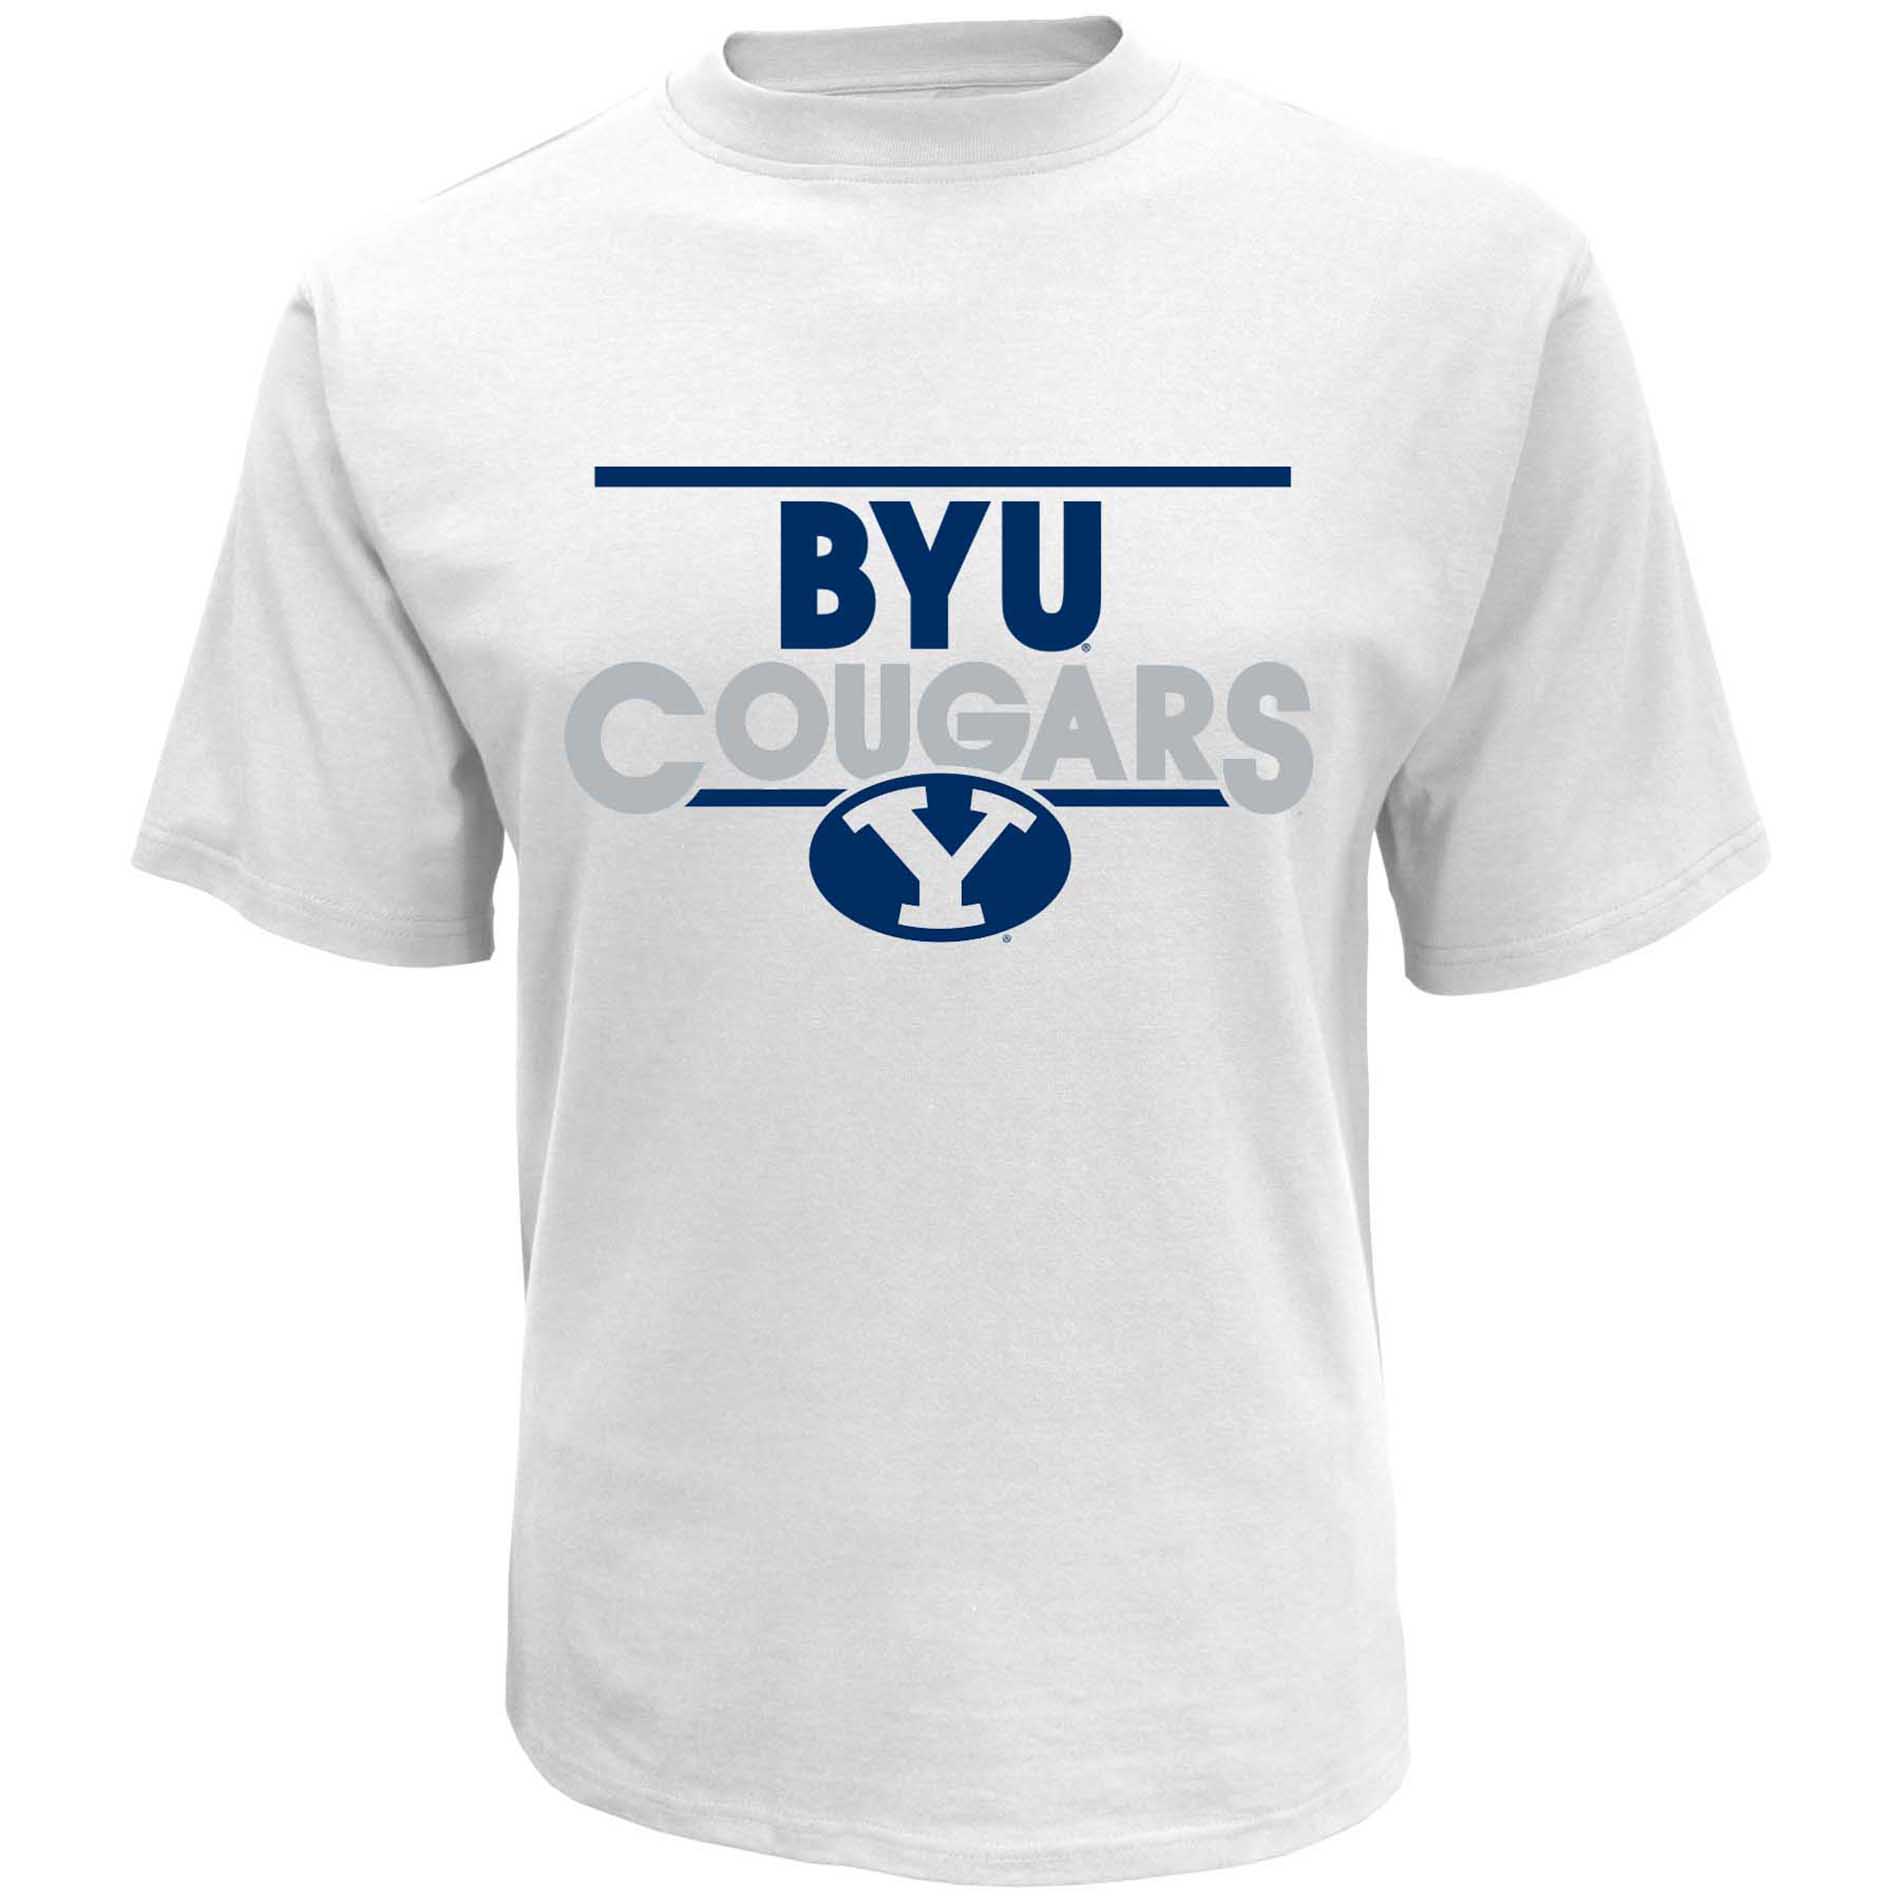 NCAA Mens' BYU Cougars Short Sleeve Print Tee